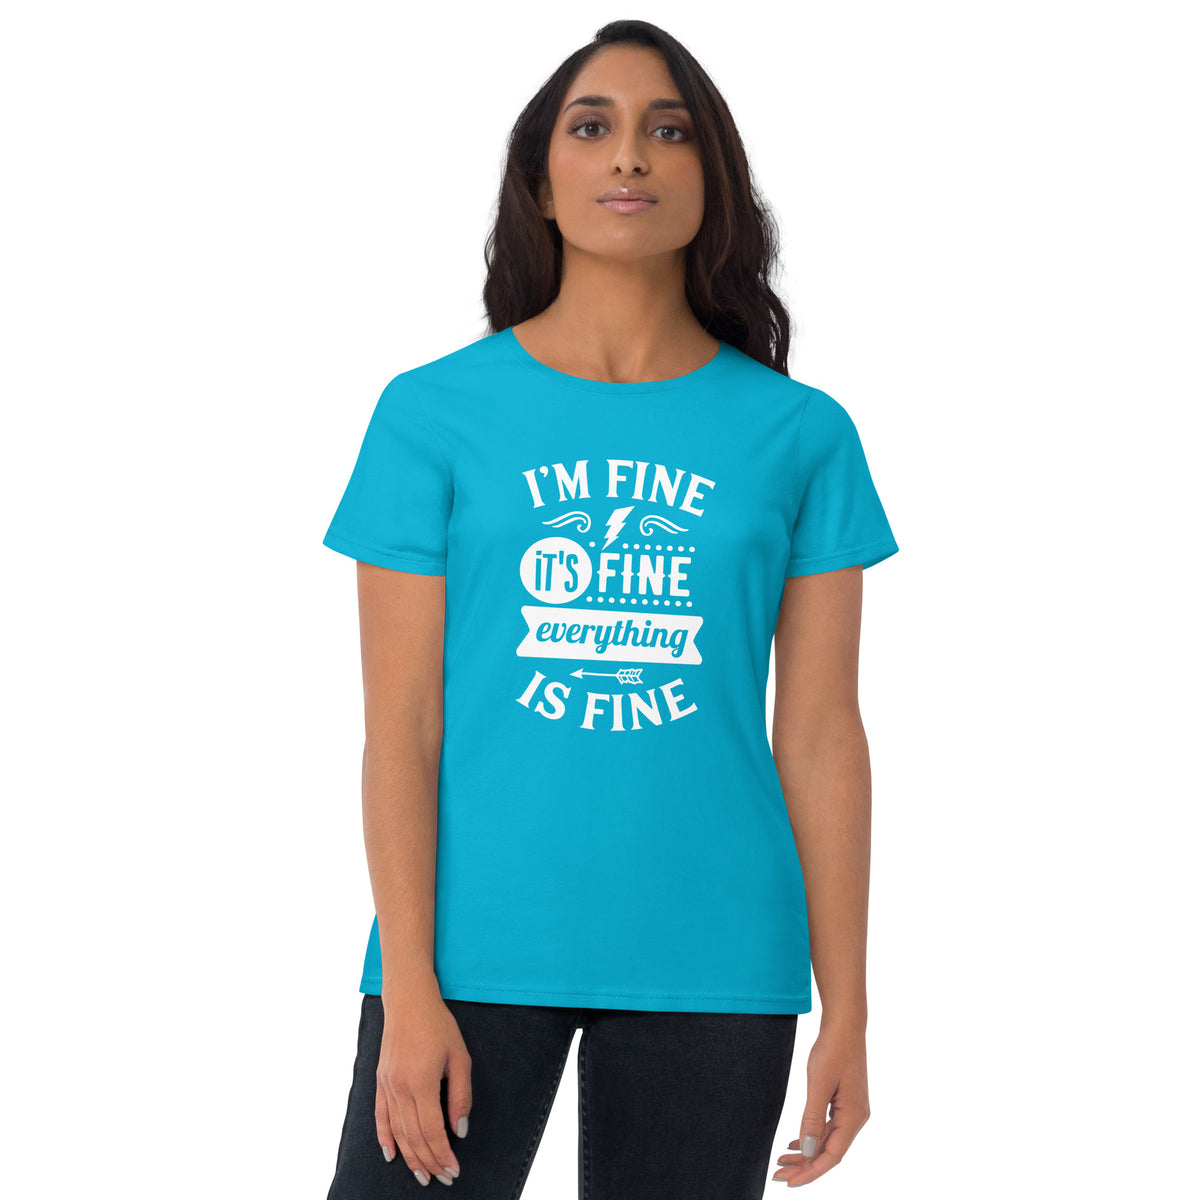 I'm Fine It's Fine Everything Is Fine Women's Short Sleeve T-Shirt